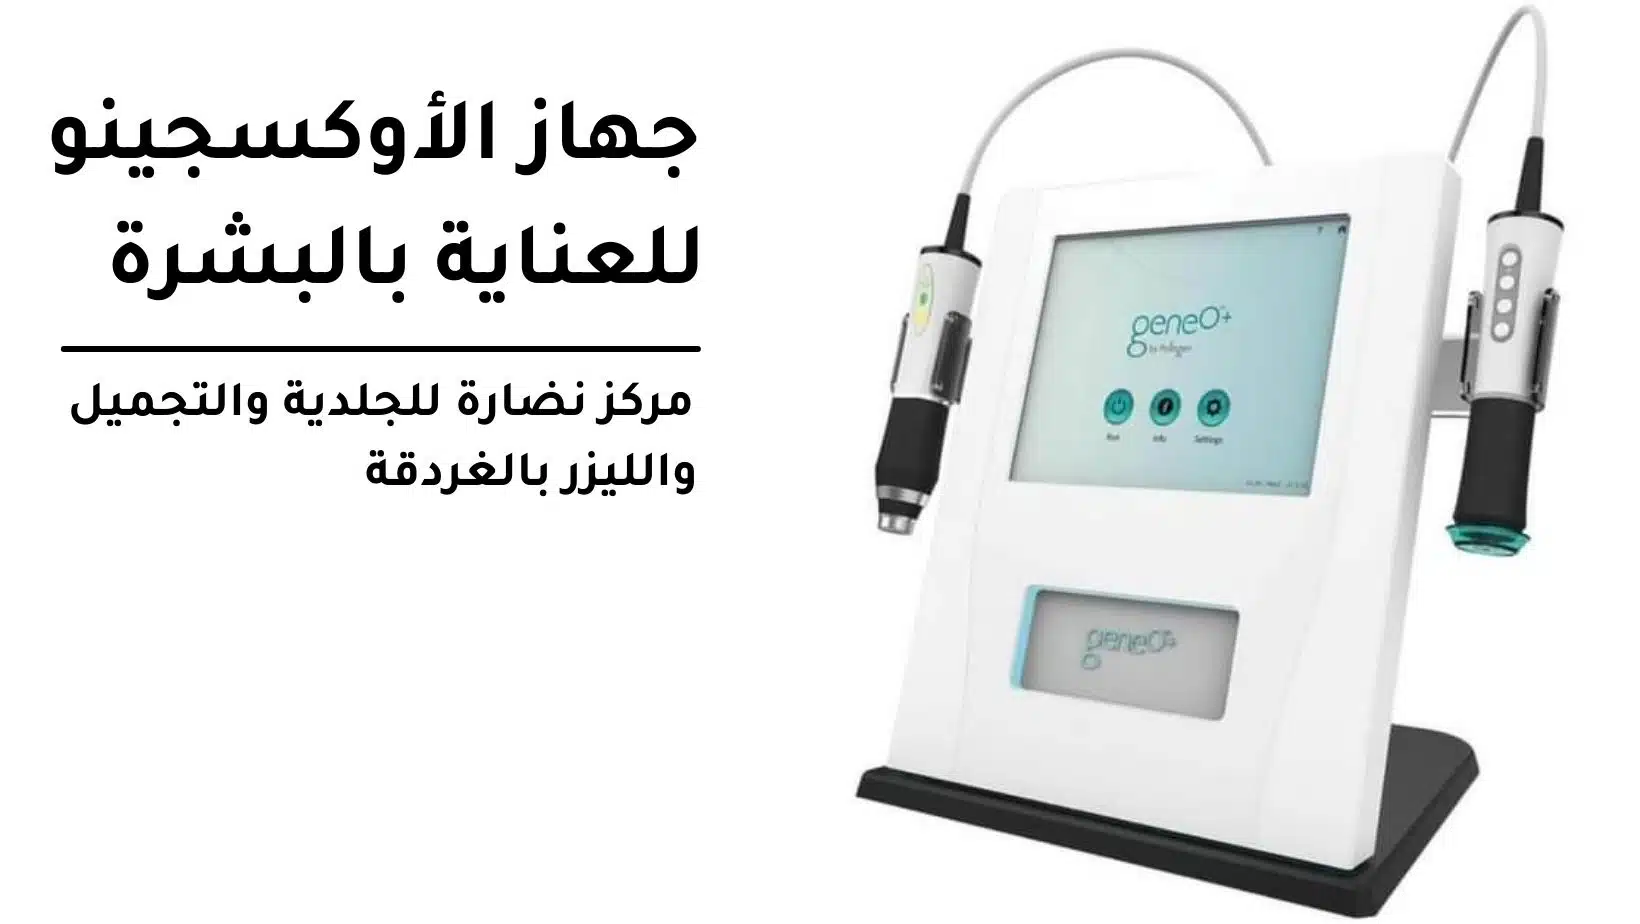 Oxygen skin care device